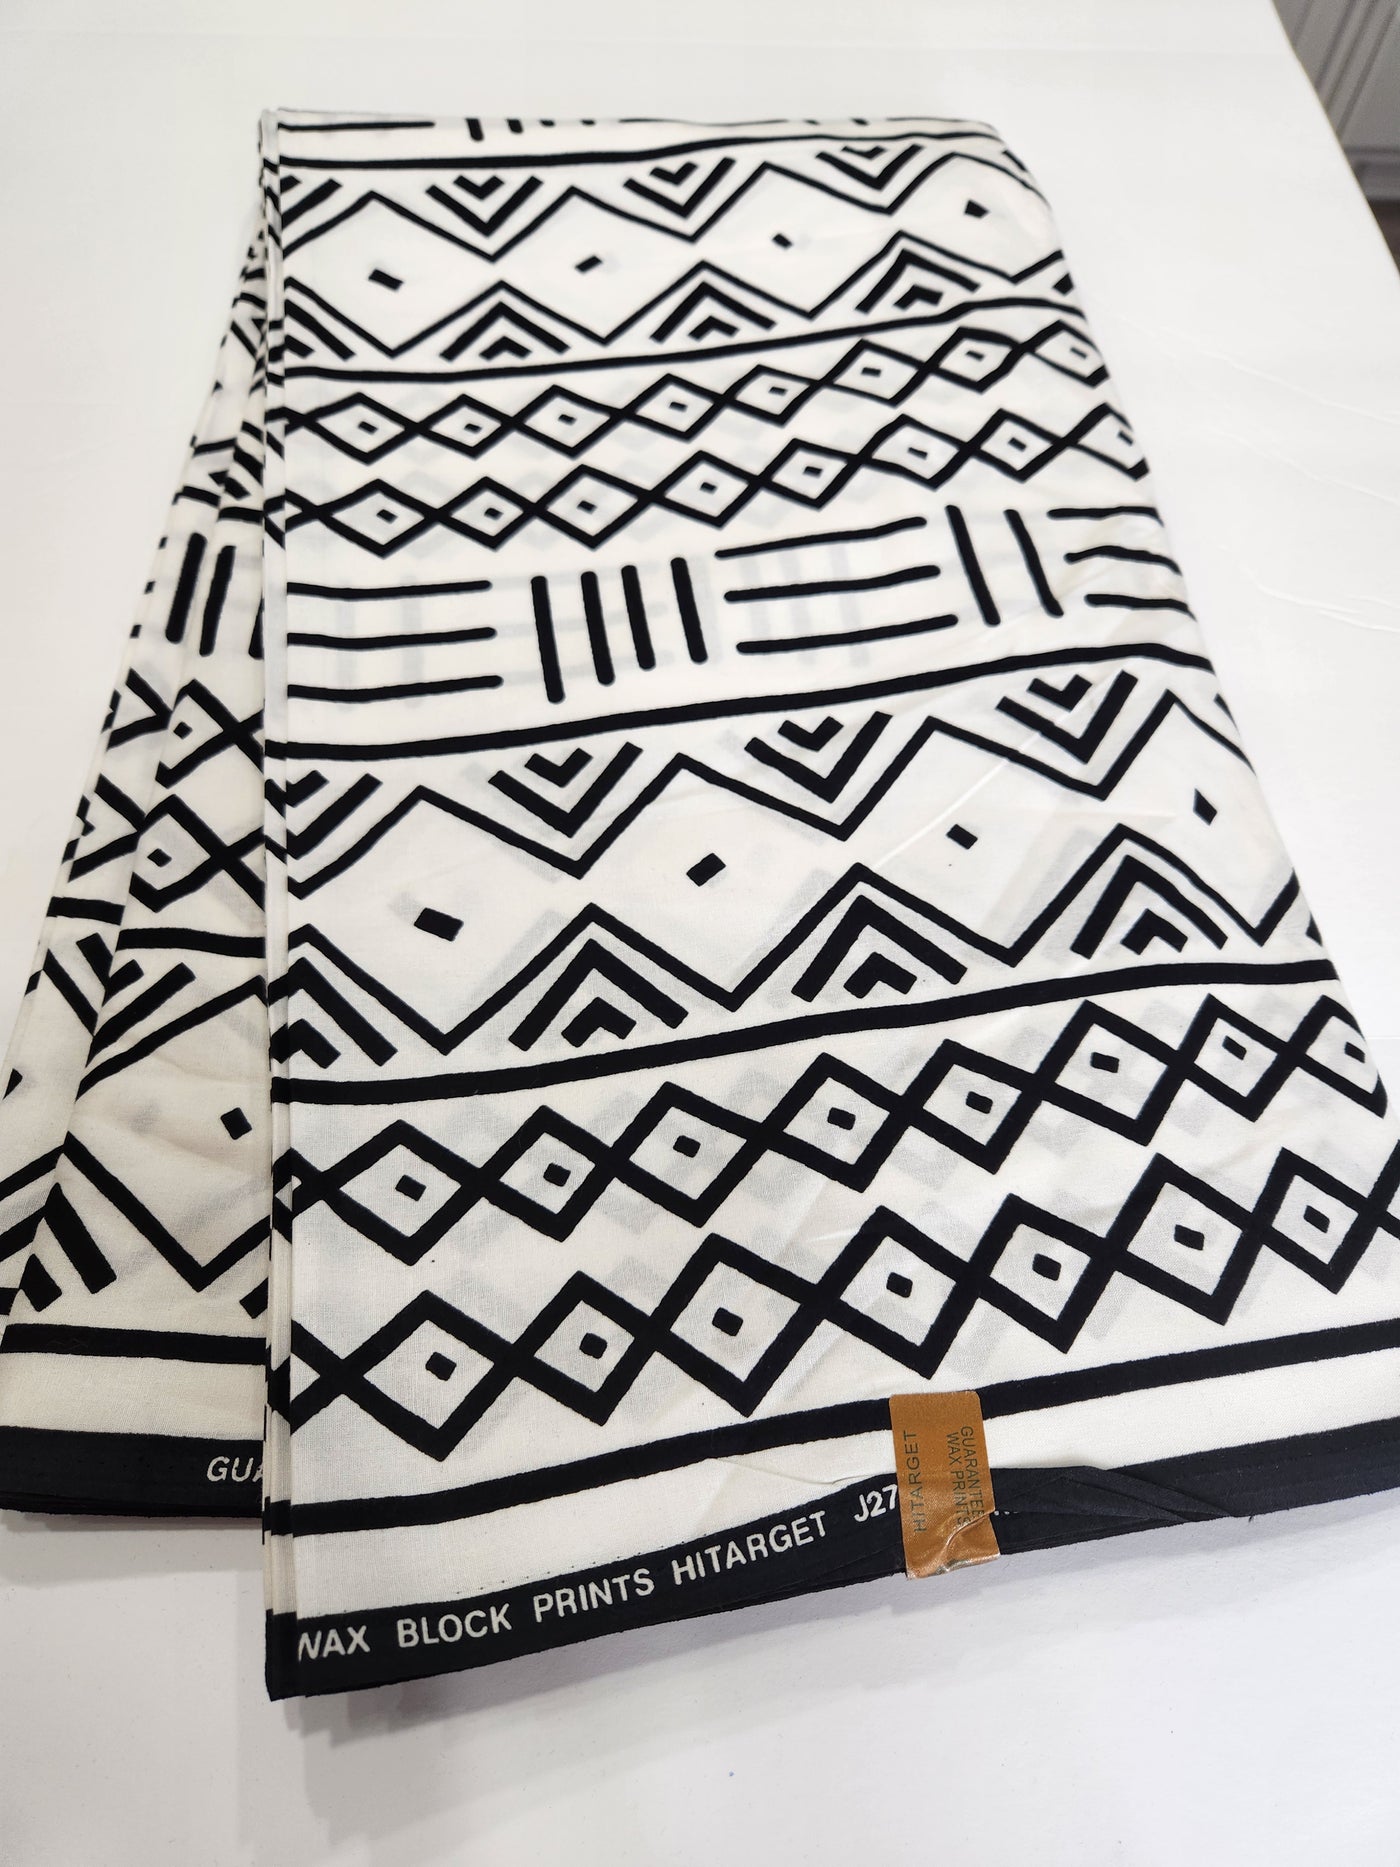 Monochrome Black and White Ankara Fabric